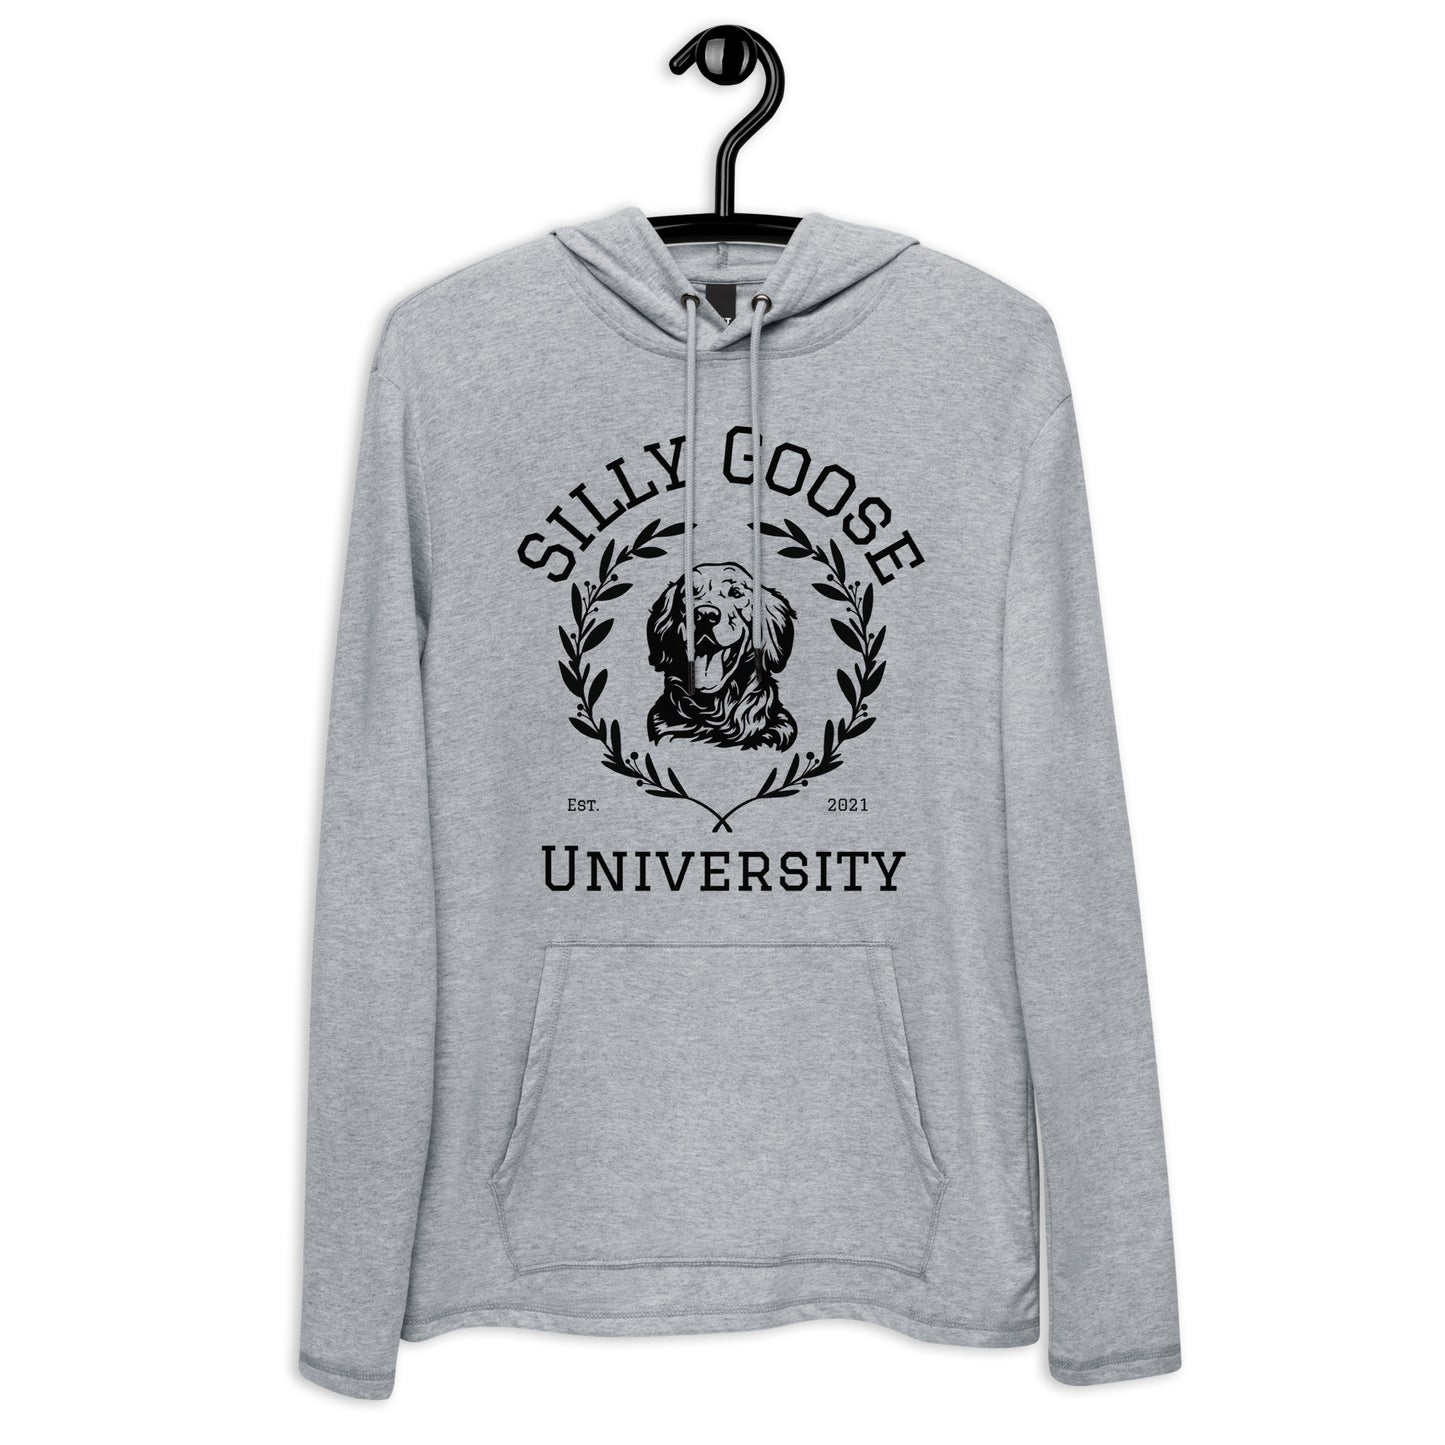 Silly Goose University Unisex Lightweight Hoodie